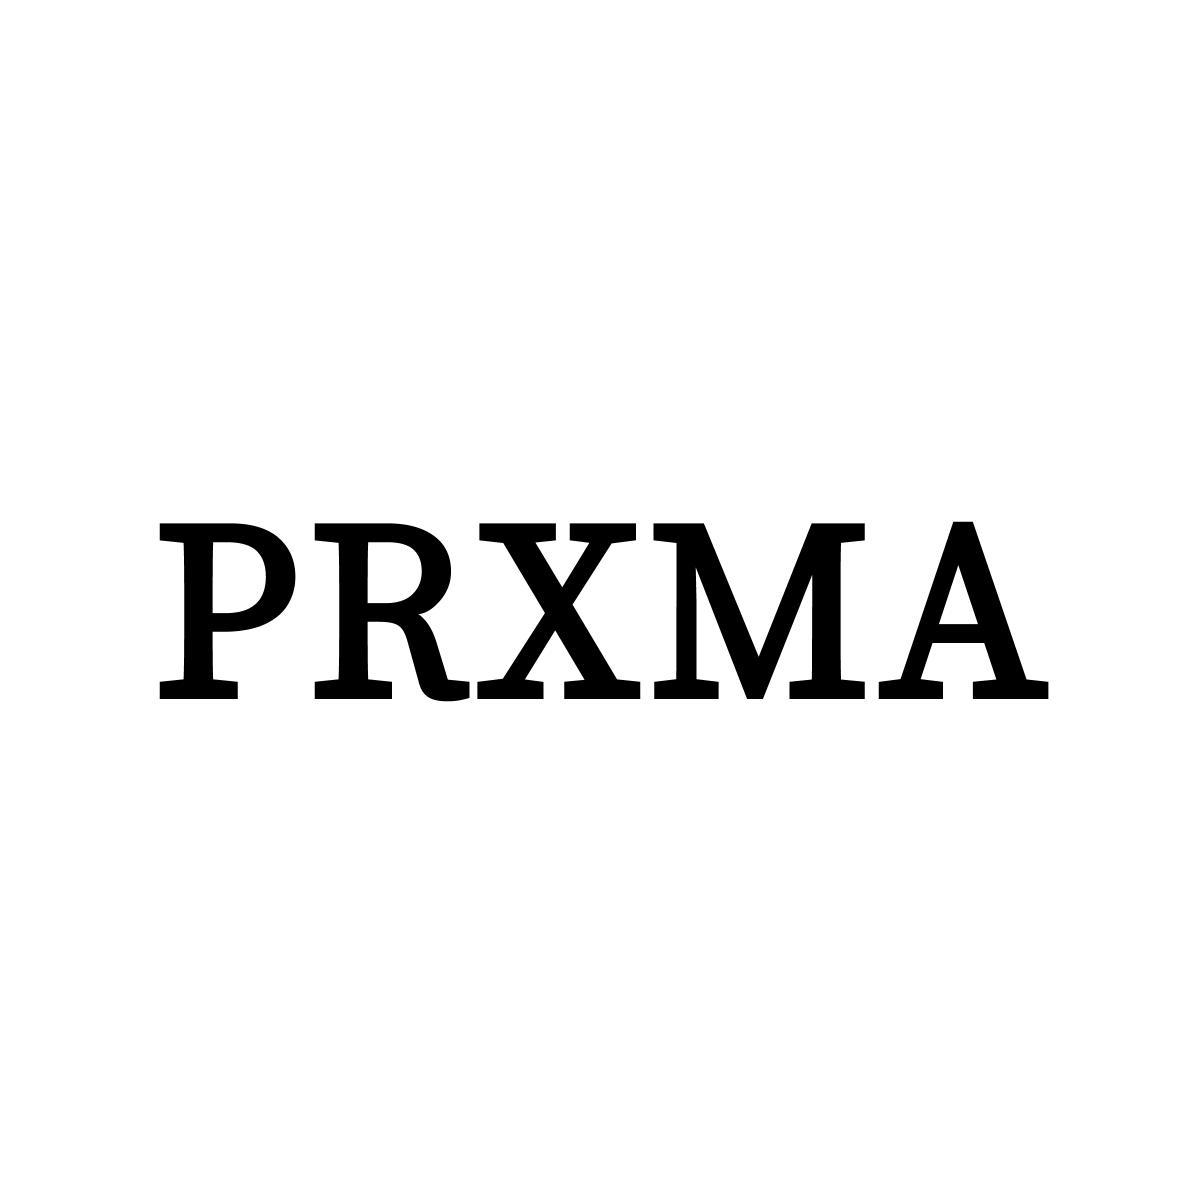 PRXMA